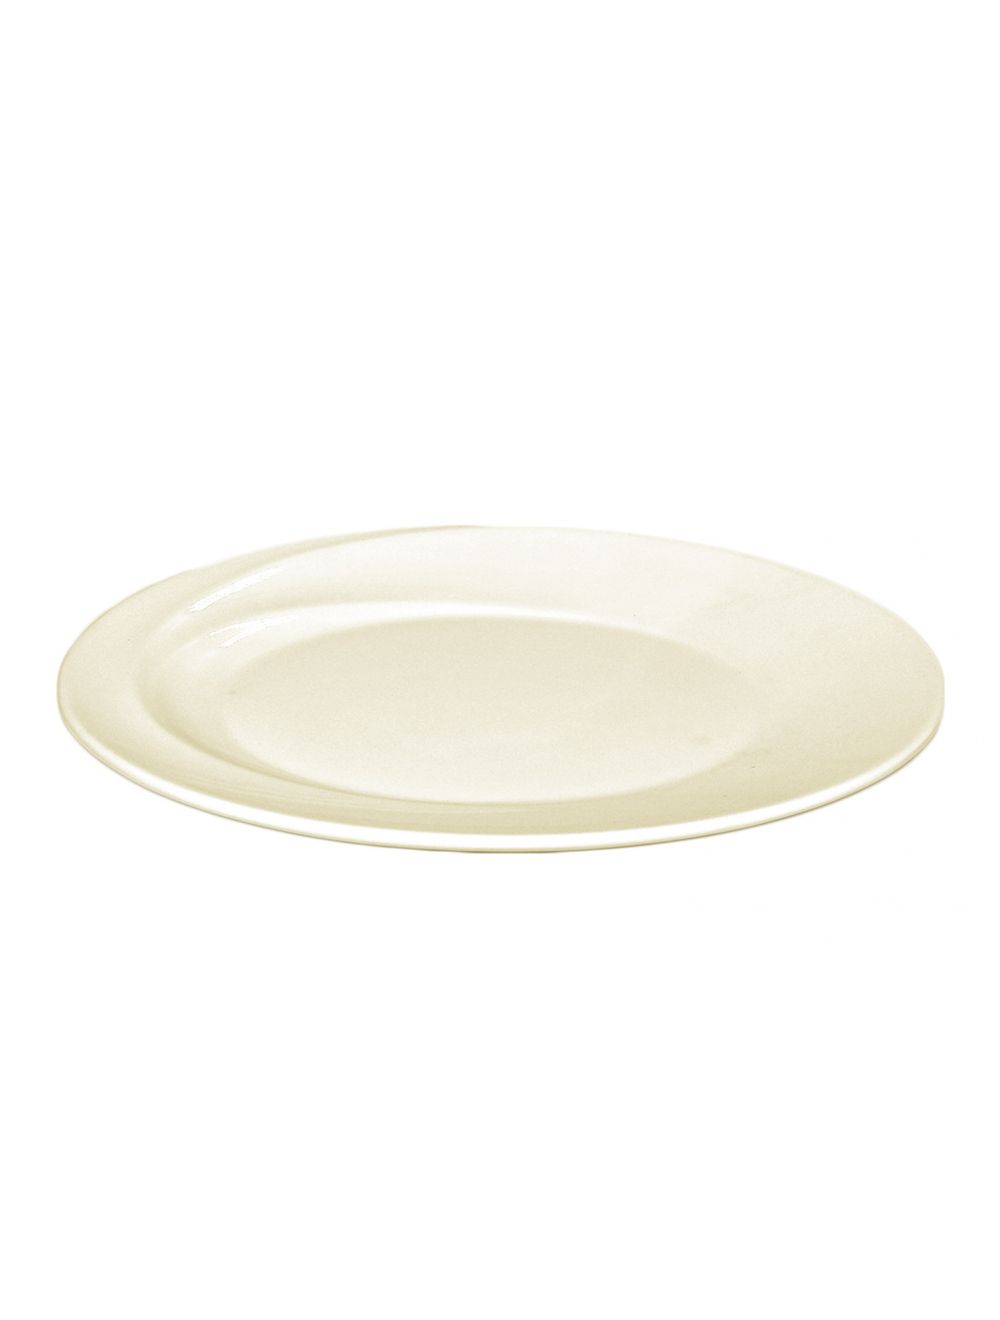 Qualitier Oval Dish - White 22.5cm